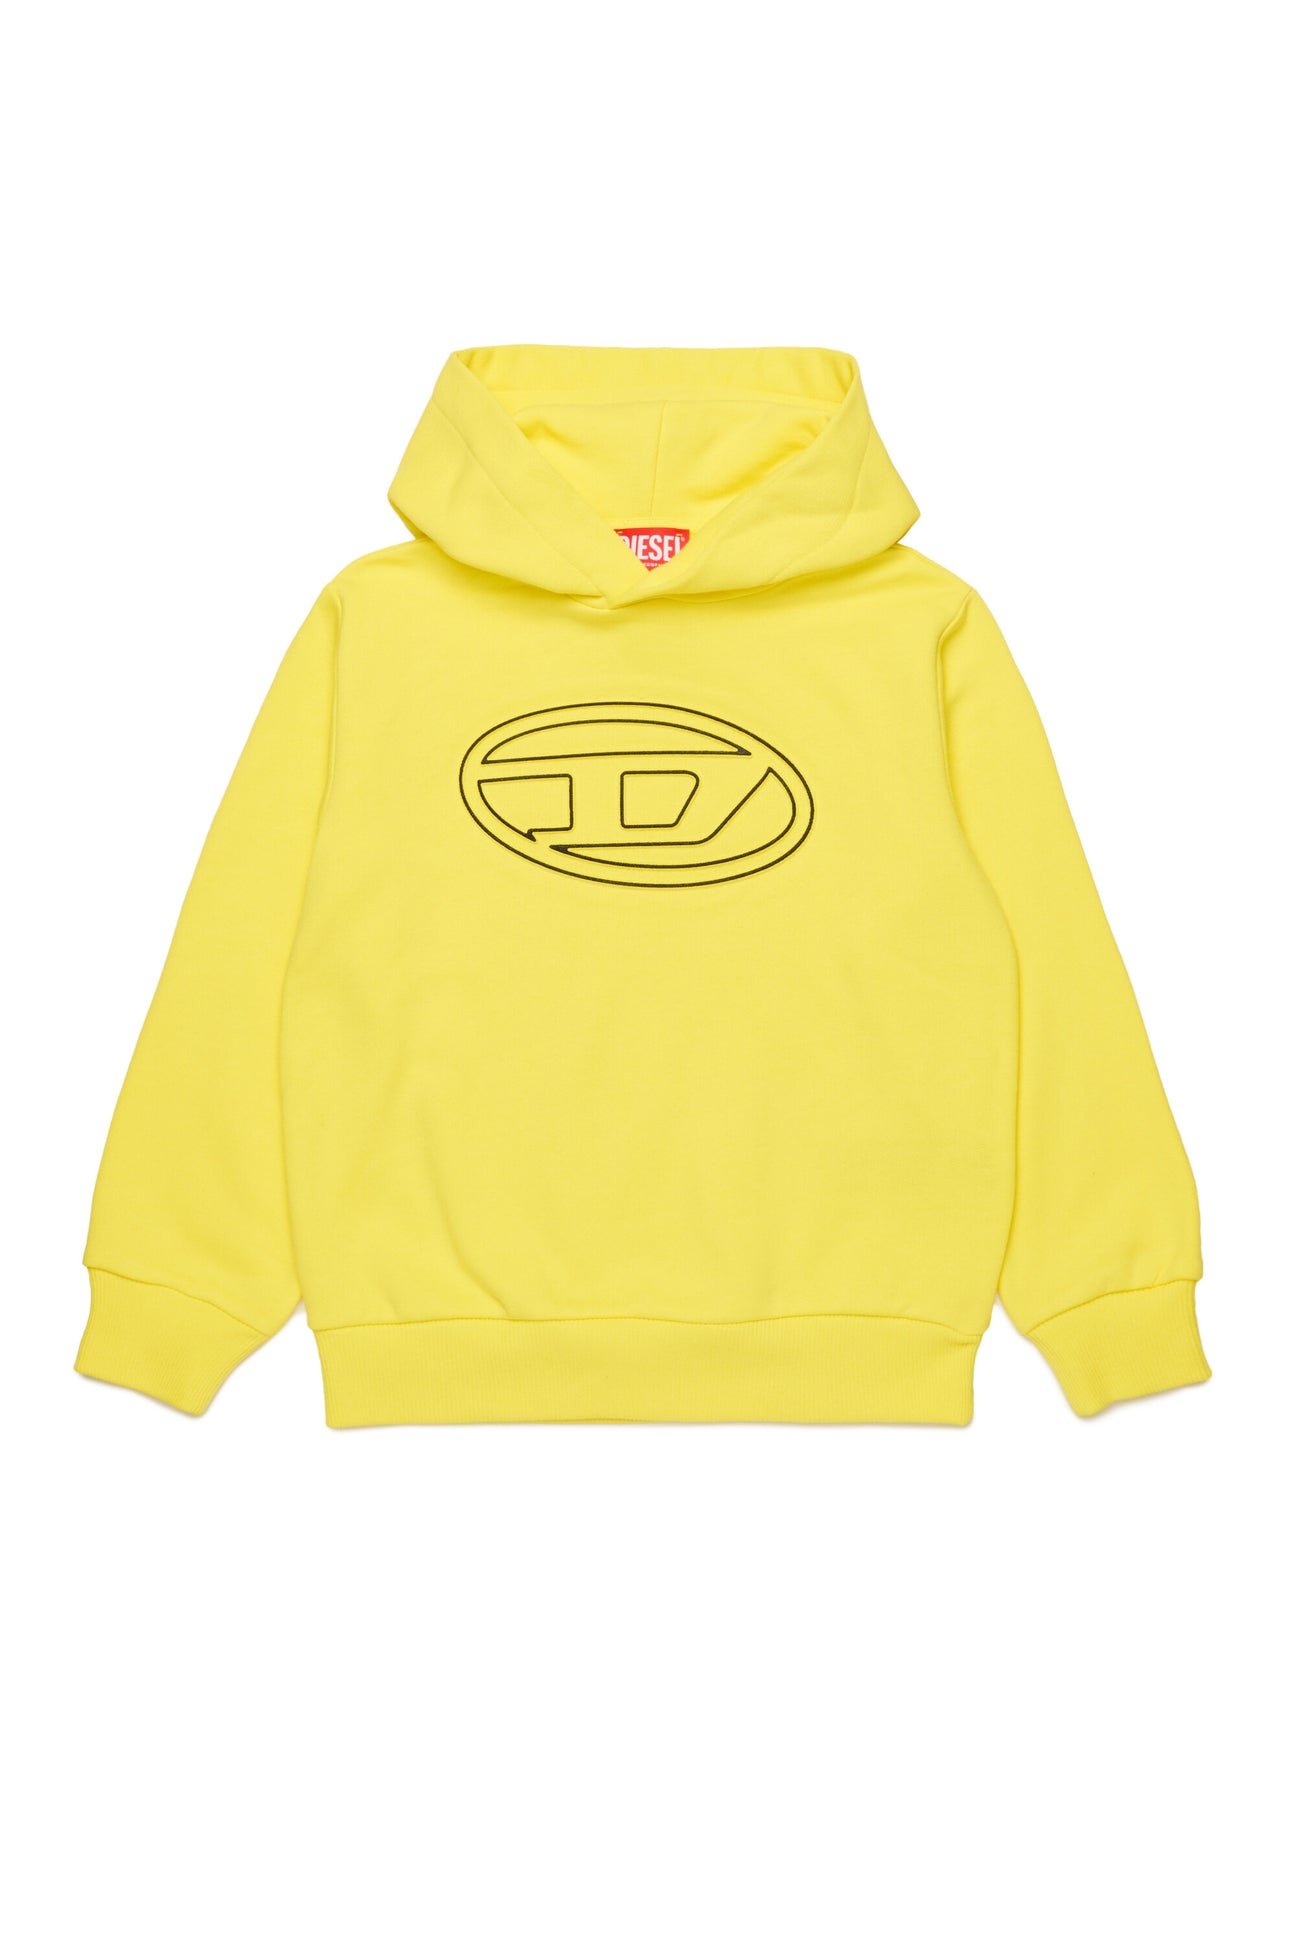 Oval D branded hooded sweatshirt 